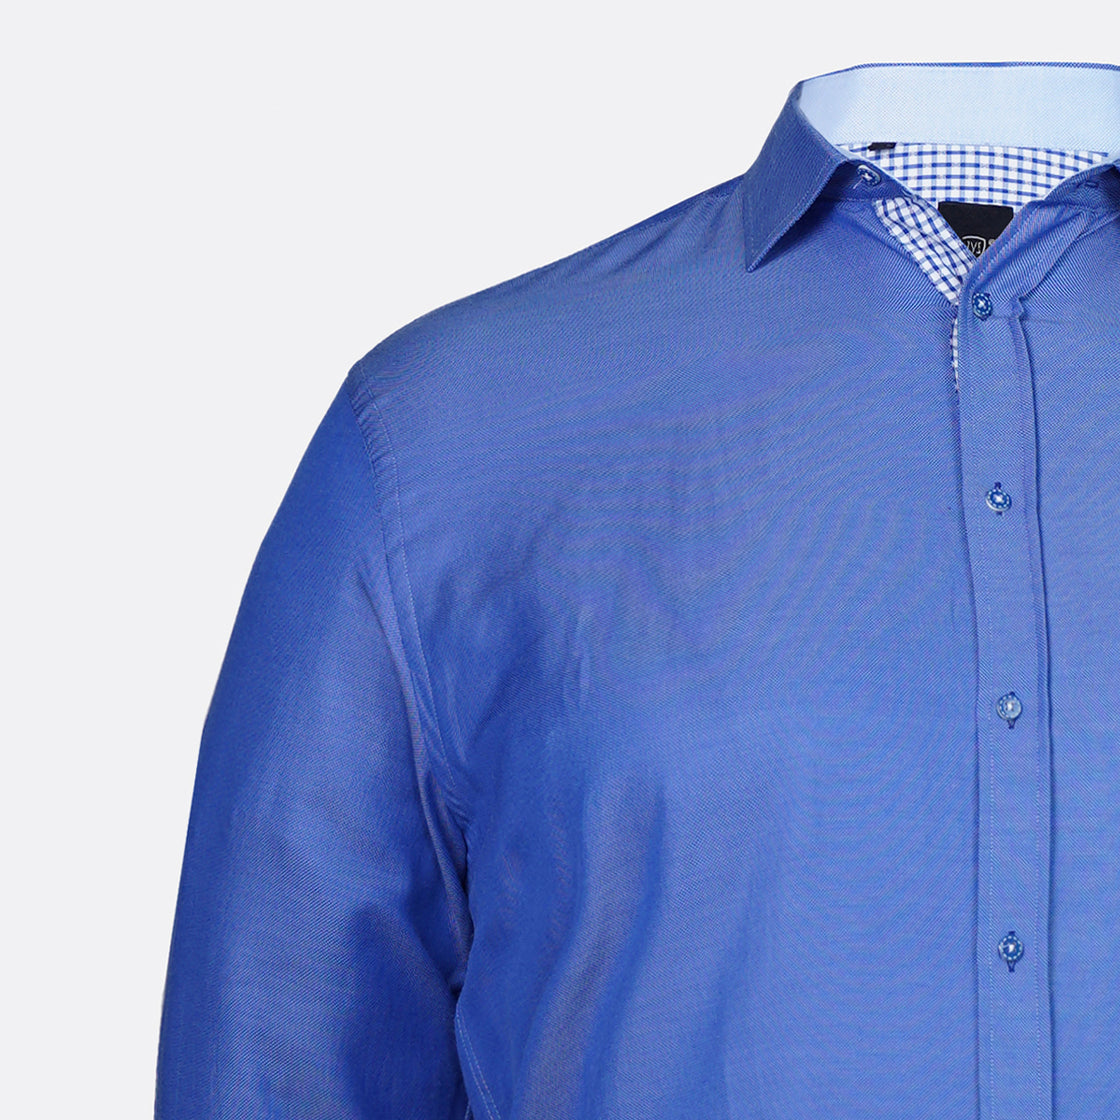 Bright Blue Contrast Milano Italy Shirt Closeup